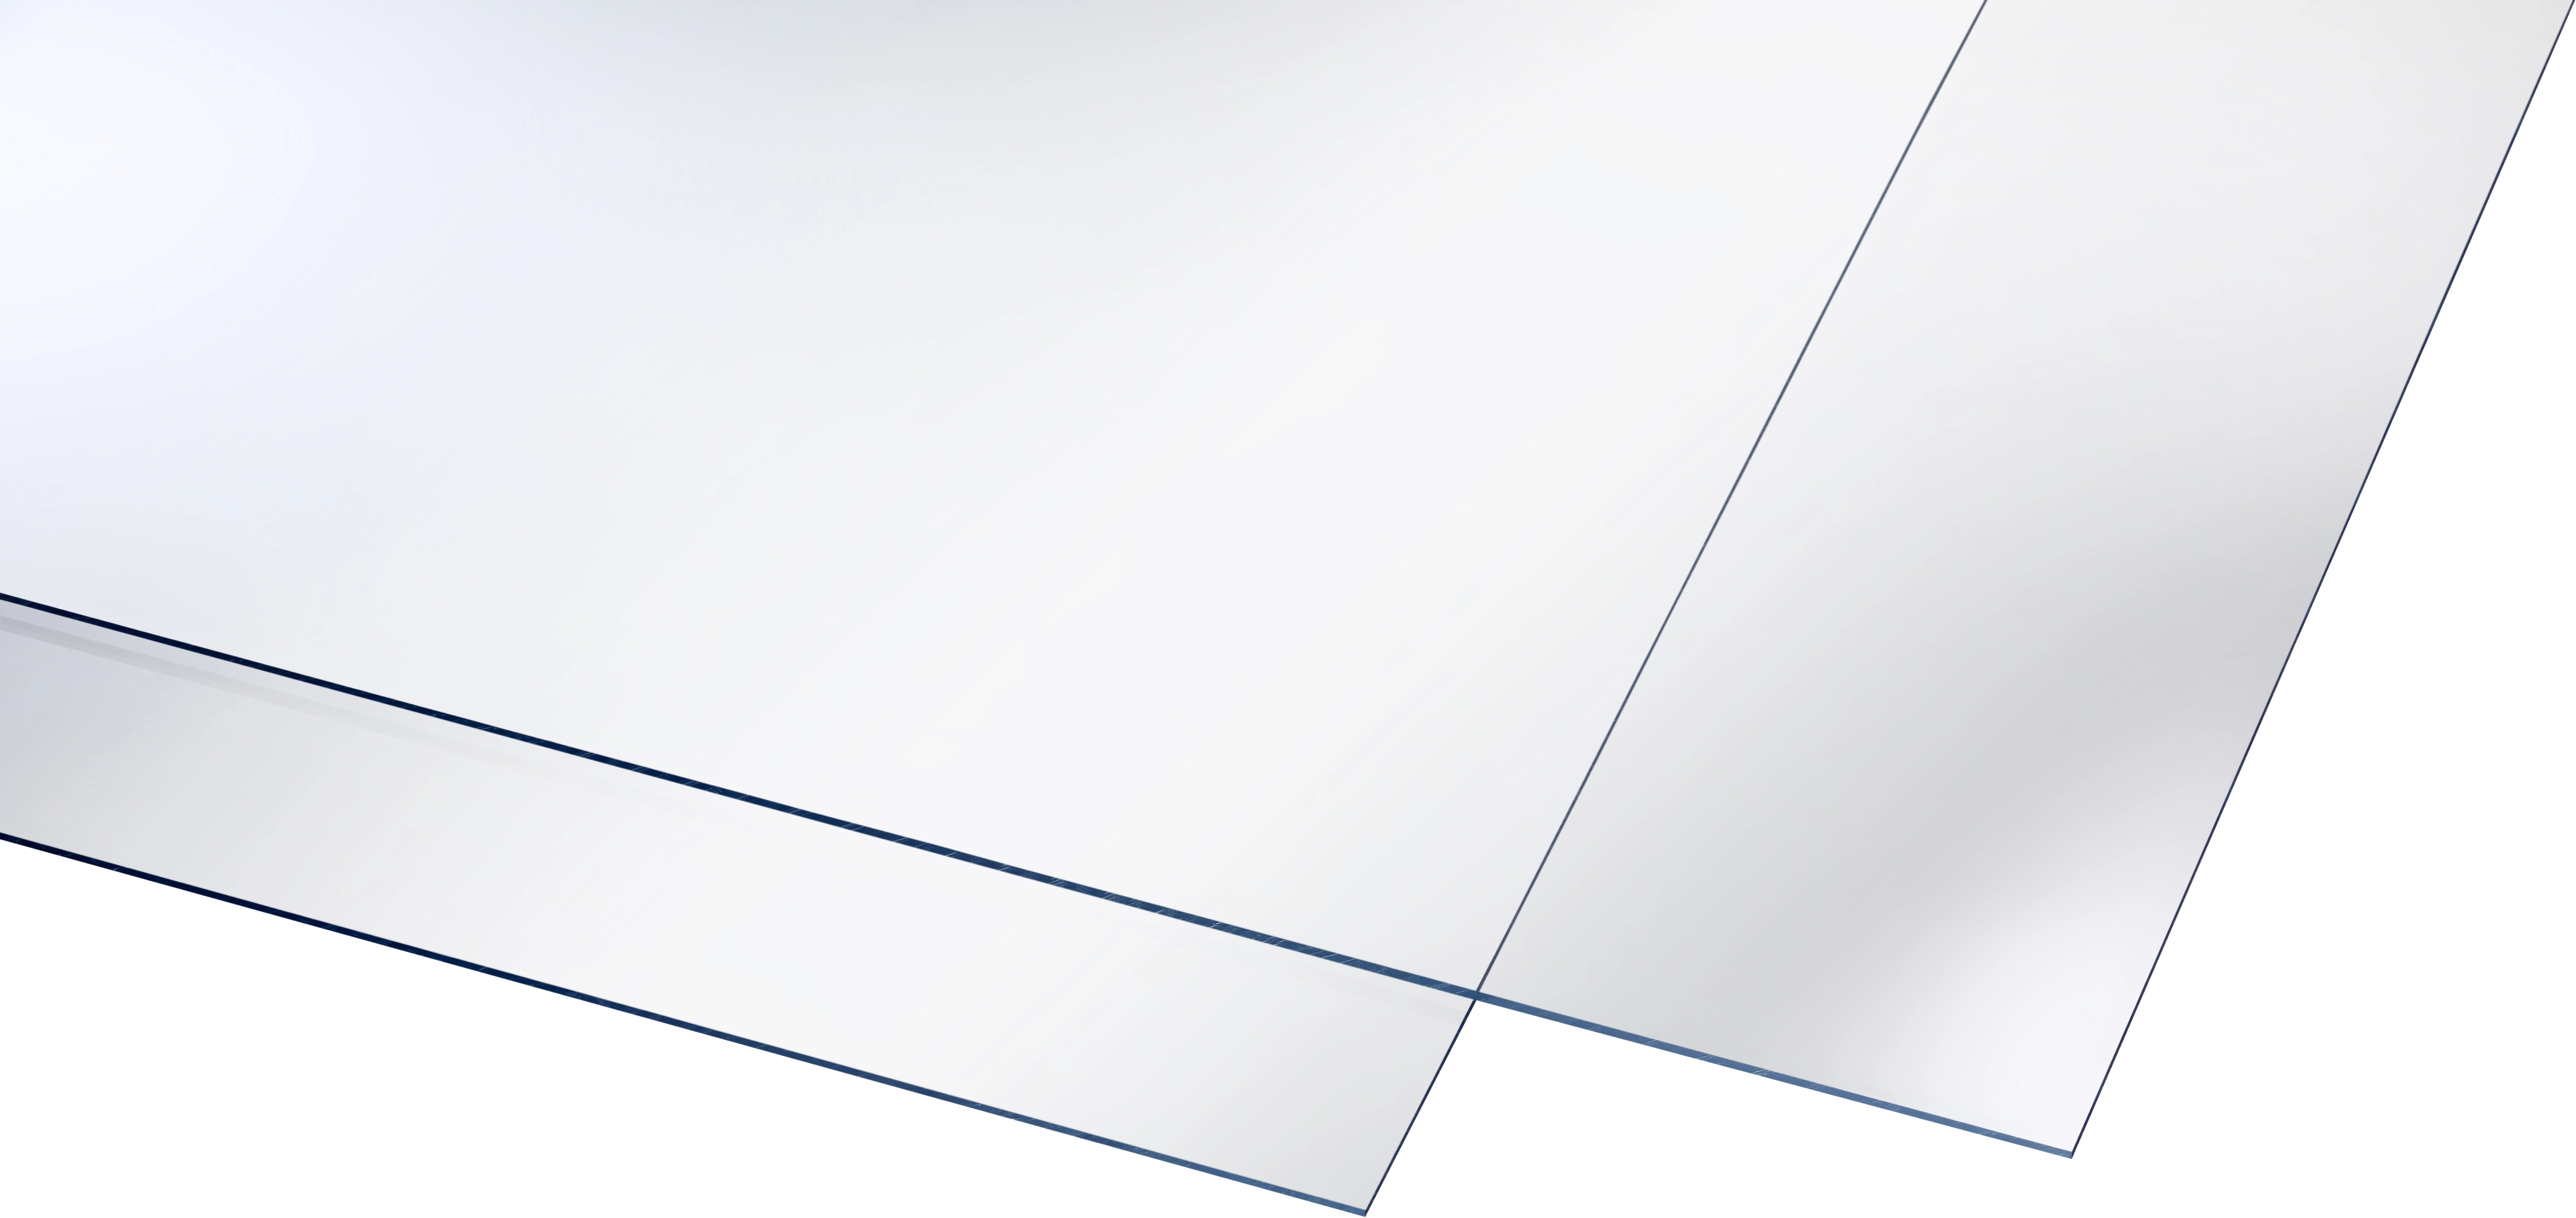 Polystyrol-Platte 2,5 mm glatt Transparent 1000 mm x 500 mm kaufen